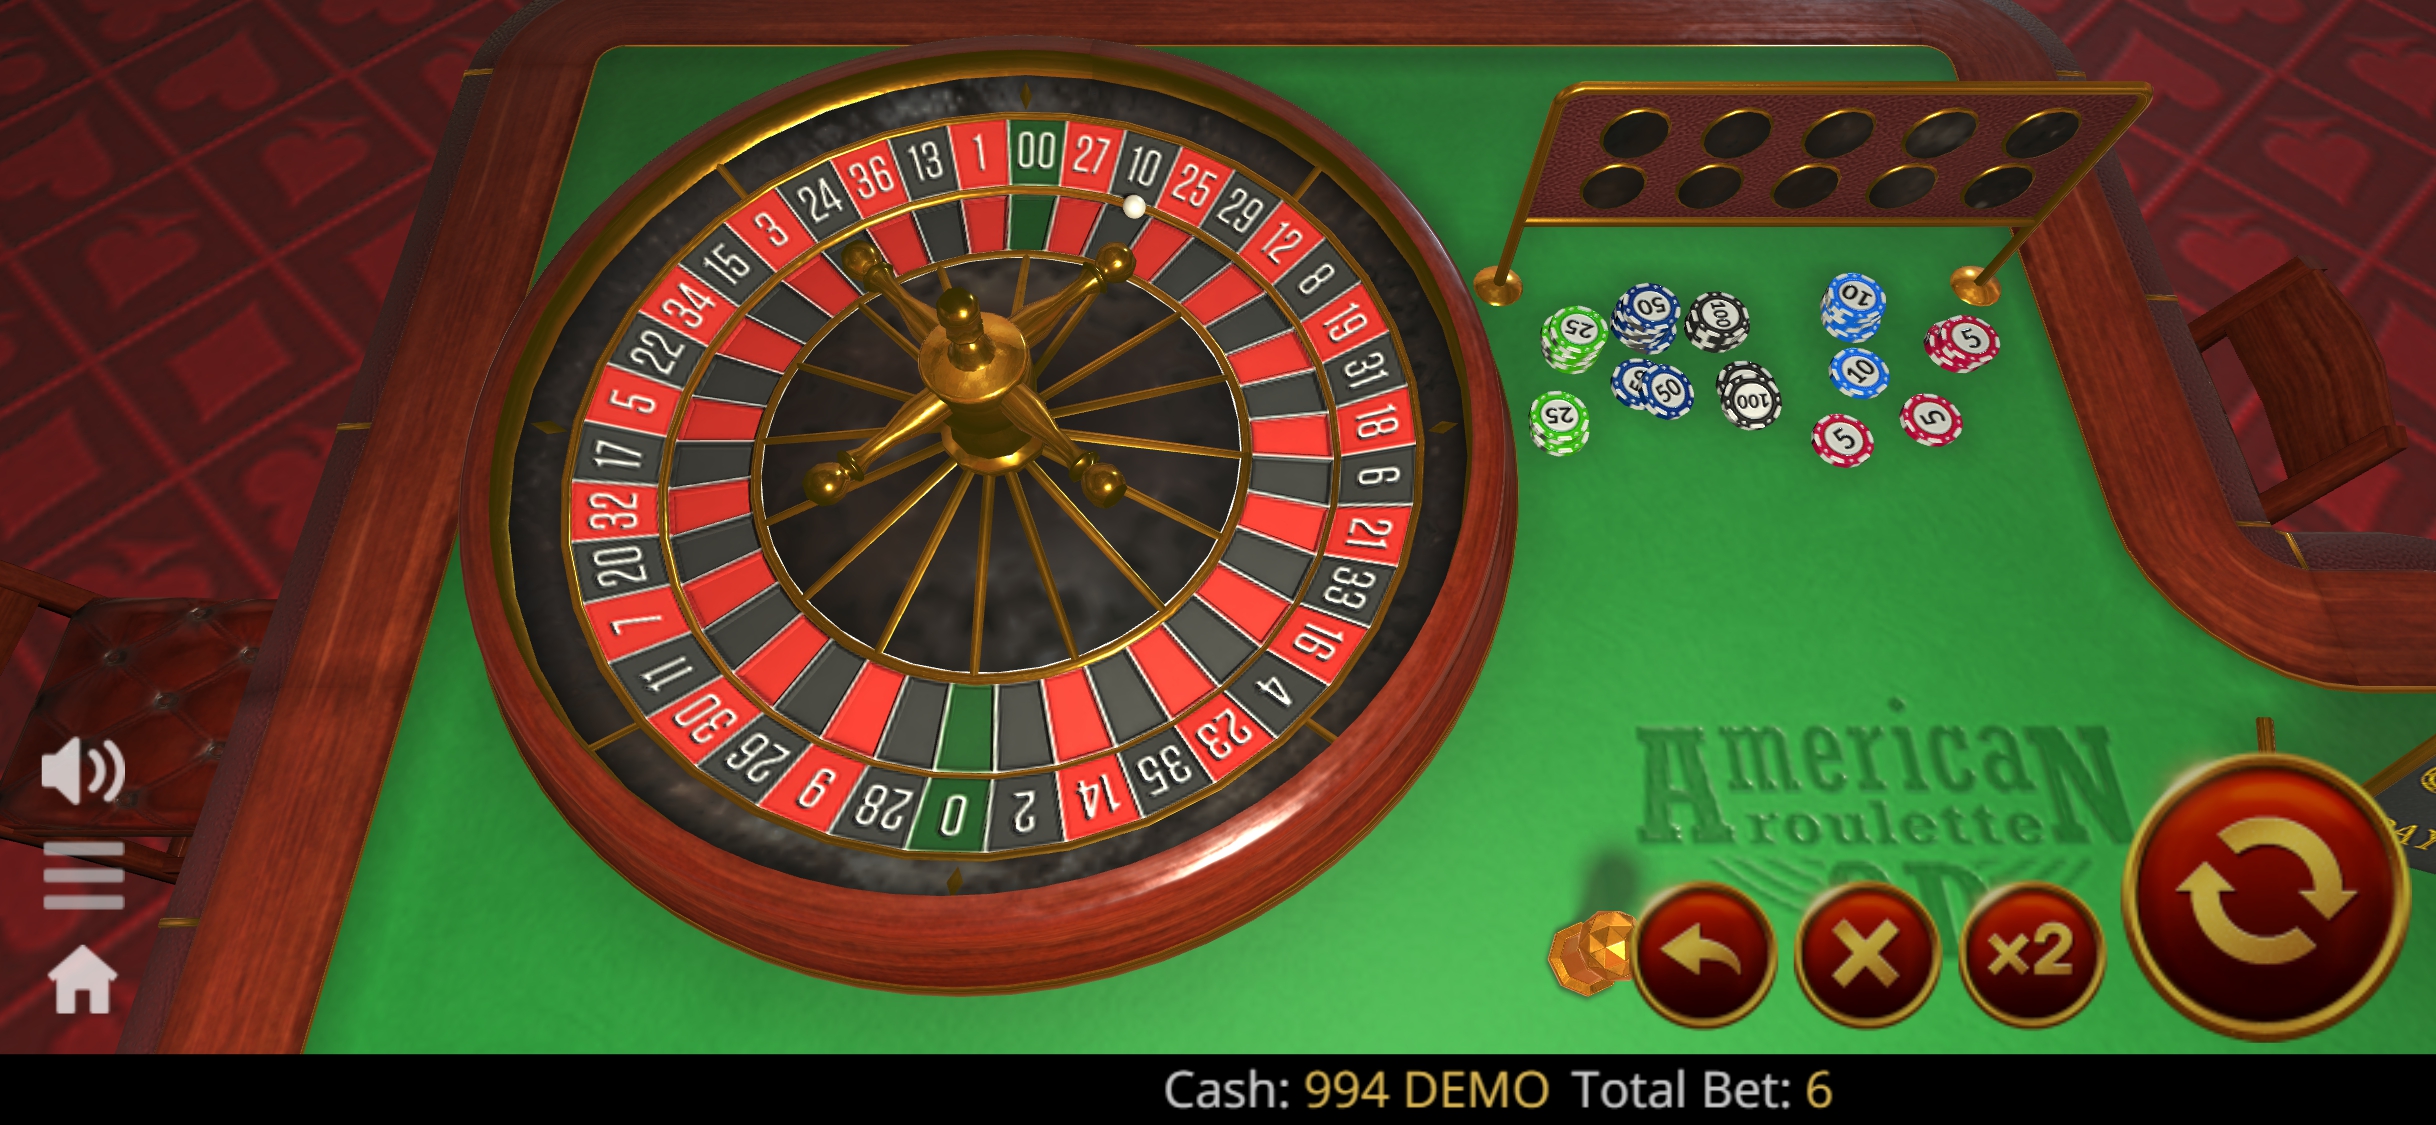 Jackpot Paradise Casino Mobile Casino Games Review